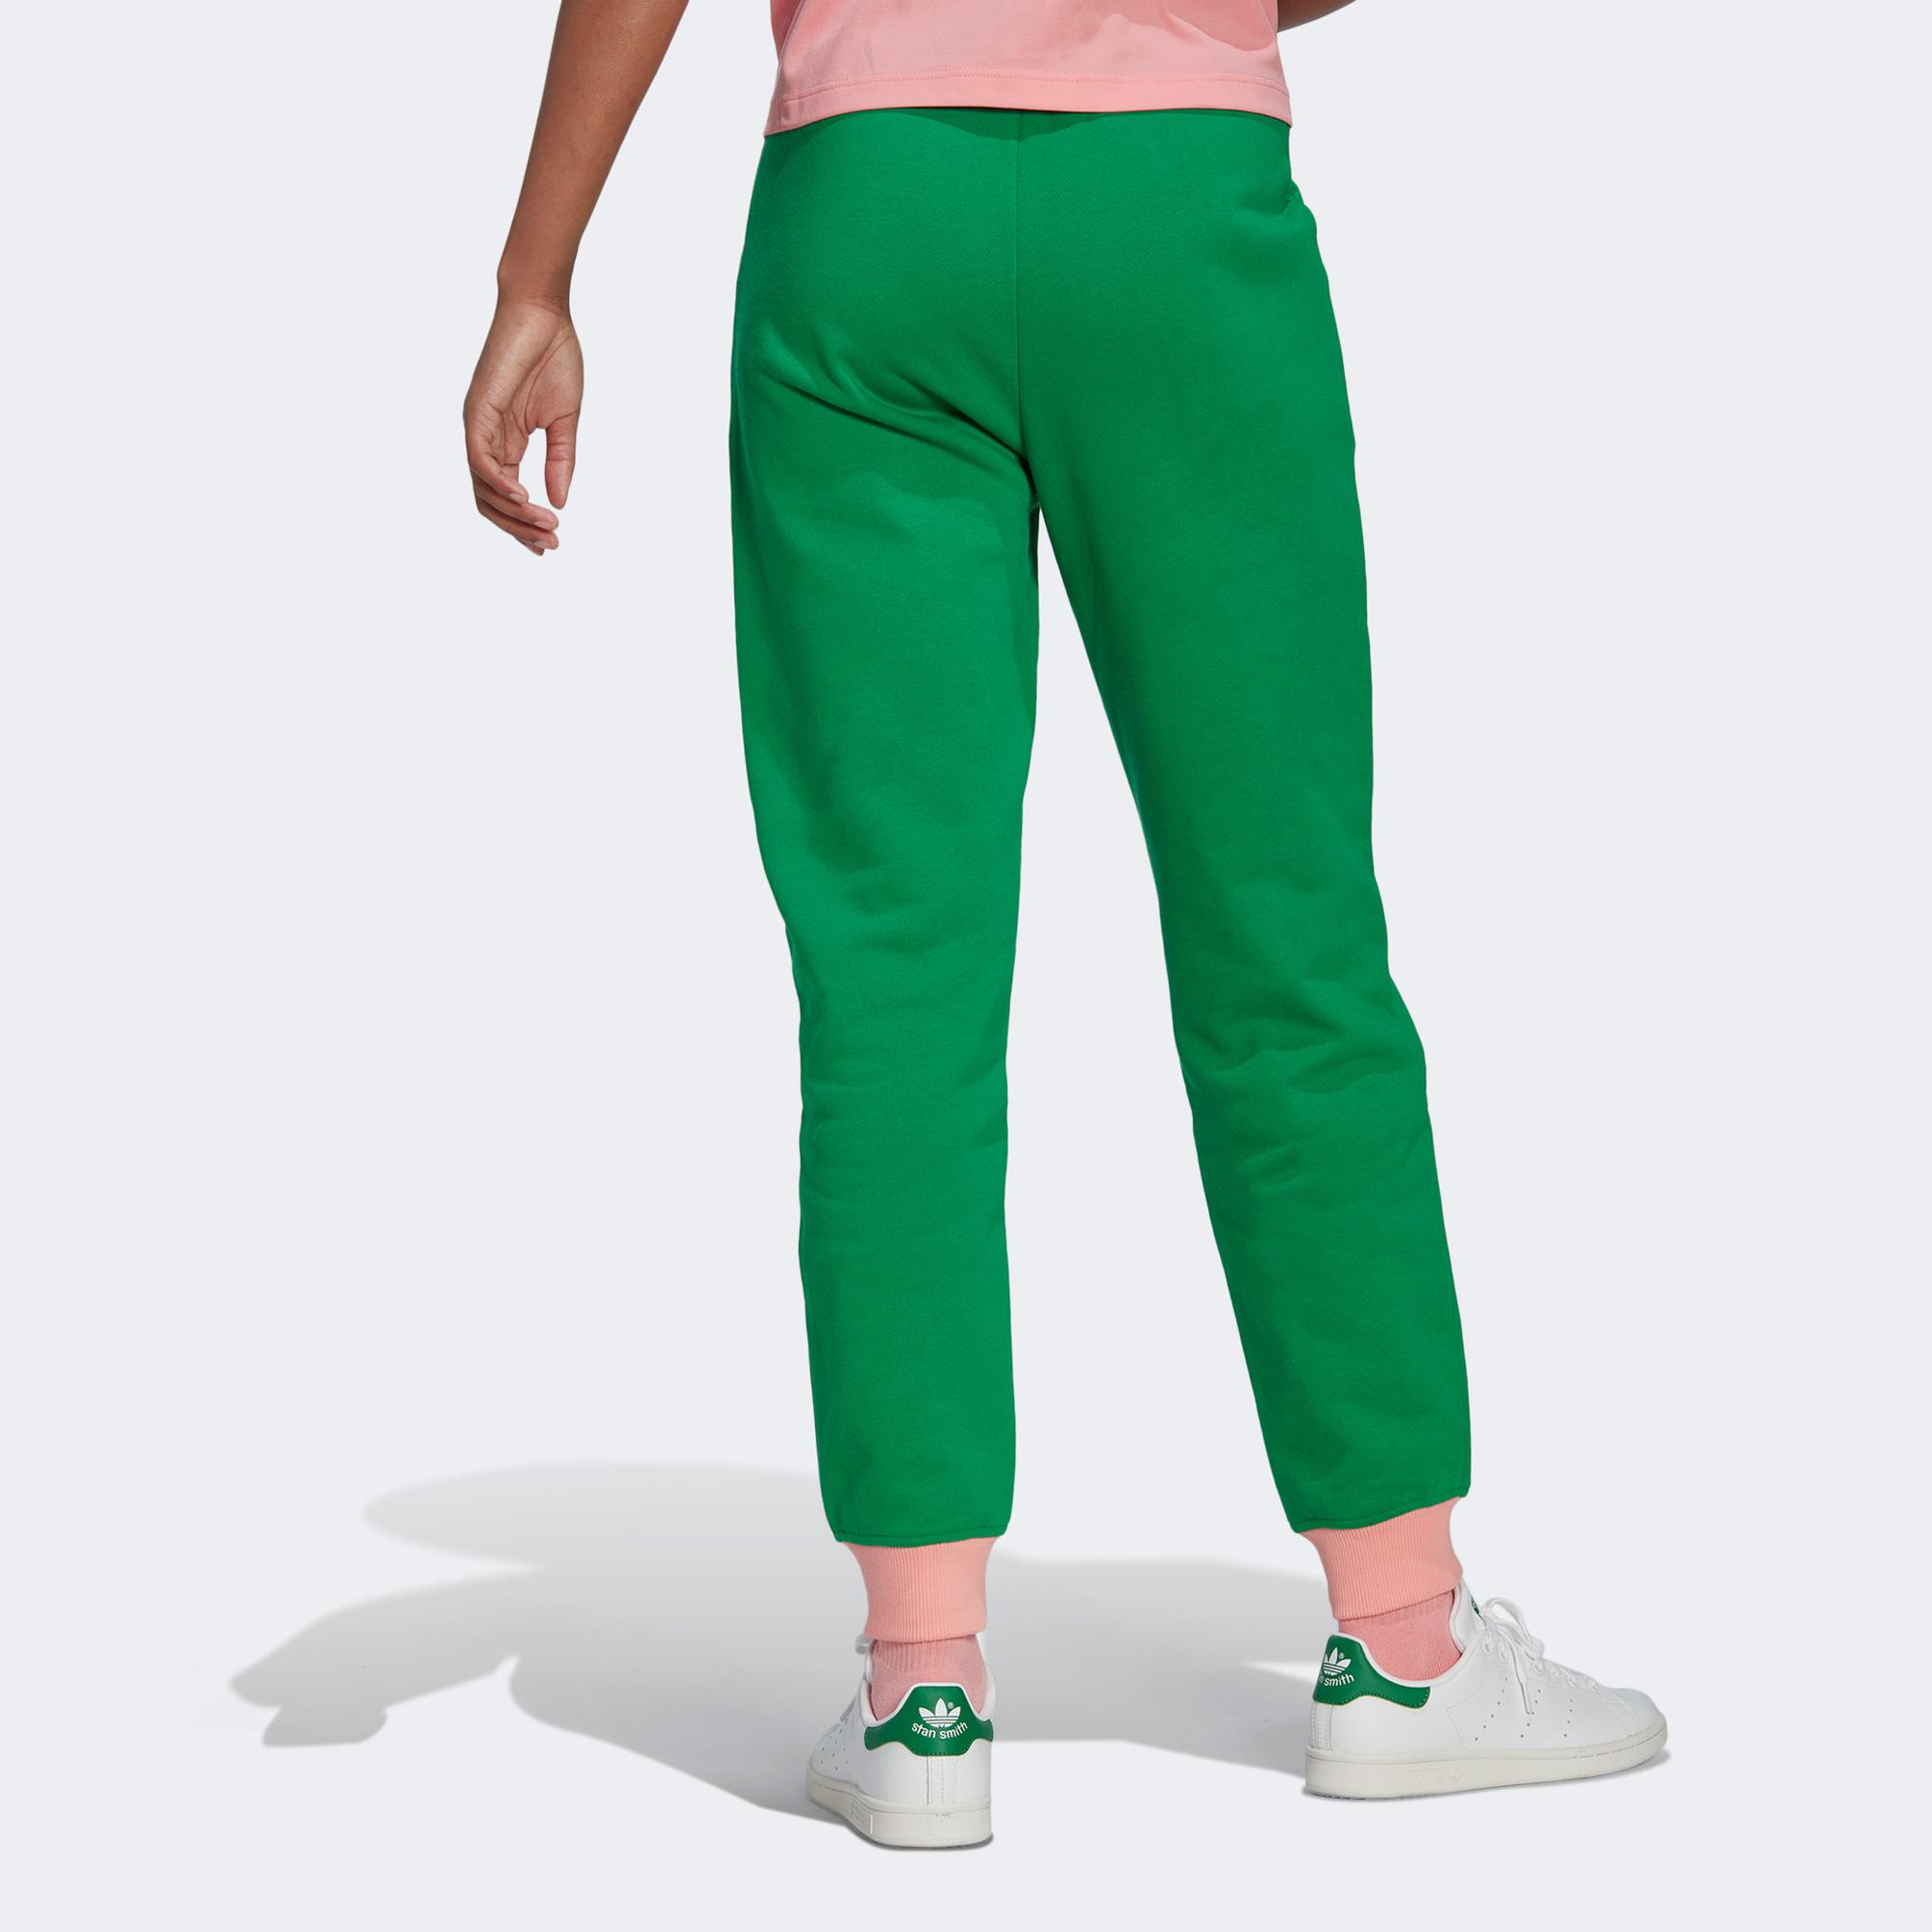  adidas Kadın Yeşil Eşofman Altı